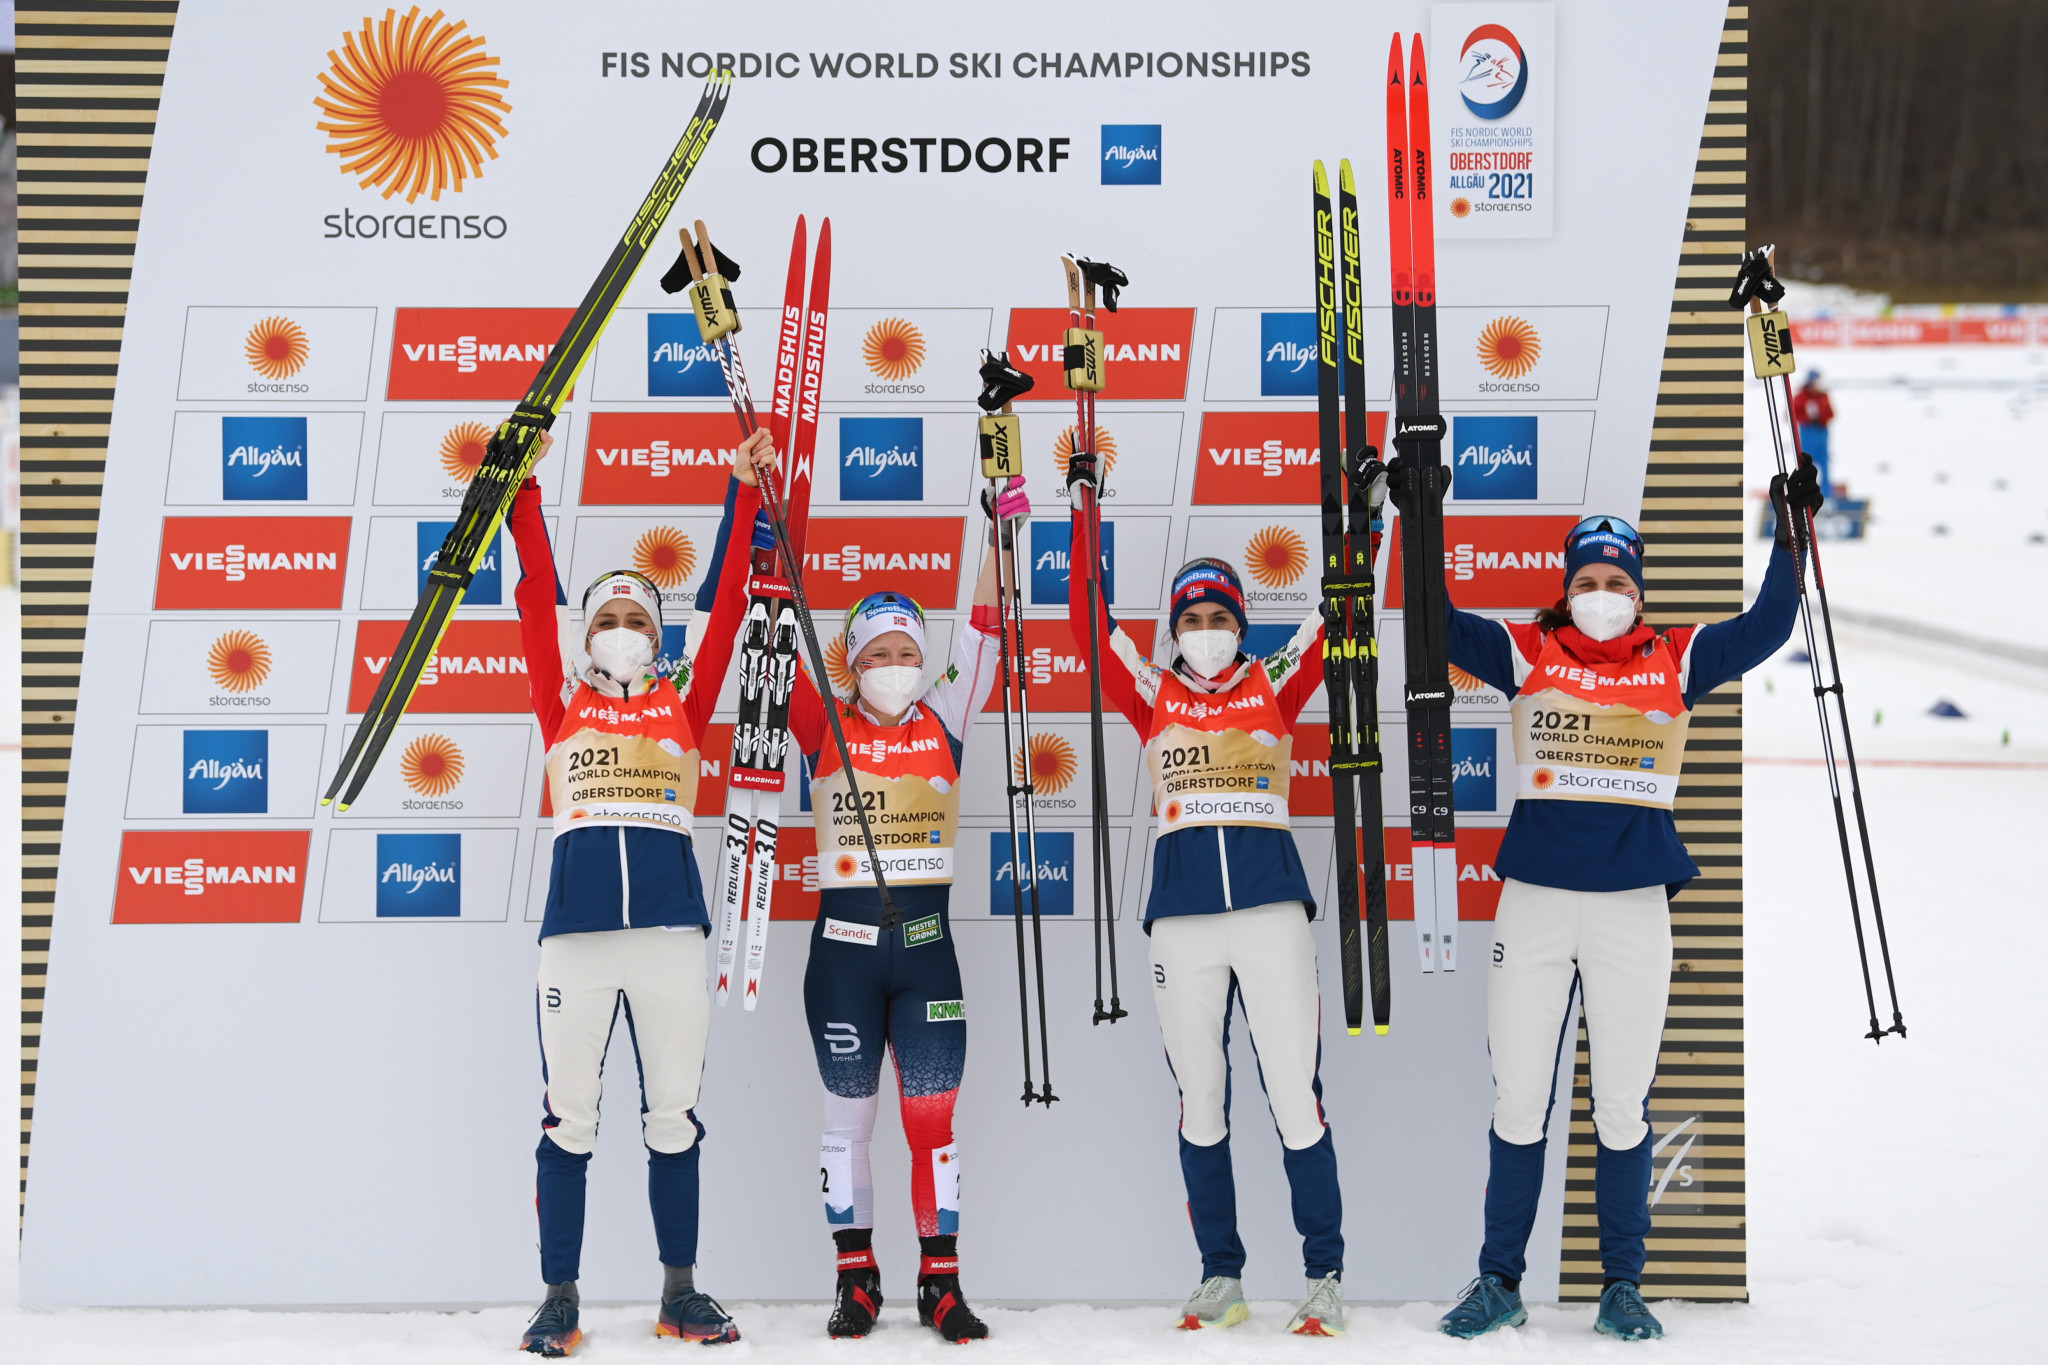 Norwegian quartet Tiril Udnes Weng, Heidi Weng, Therese Johaug and Helene Marie Fossesholm won the women's 4x5km relay ©Getty Images